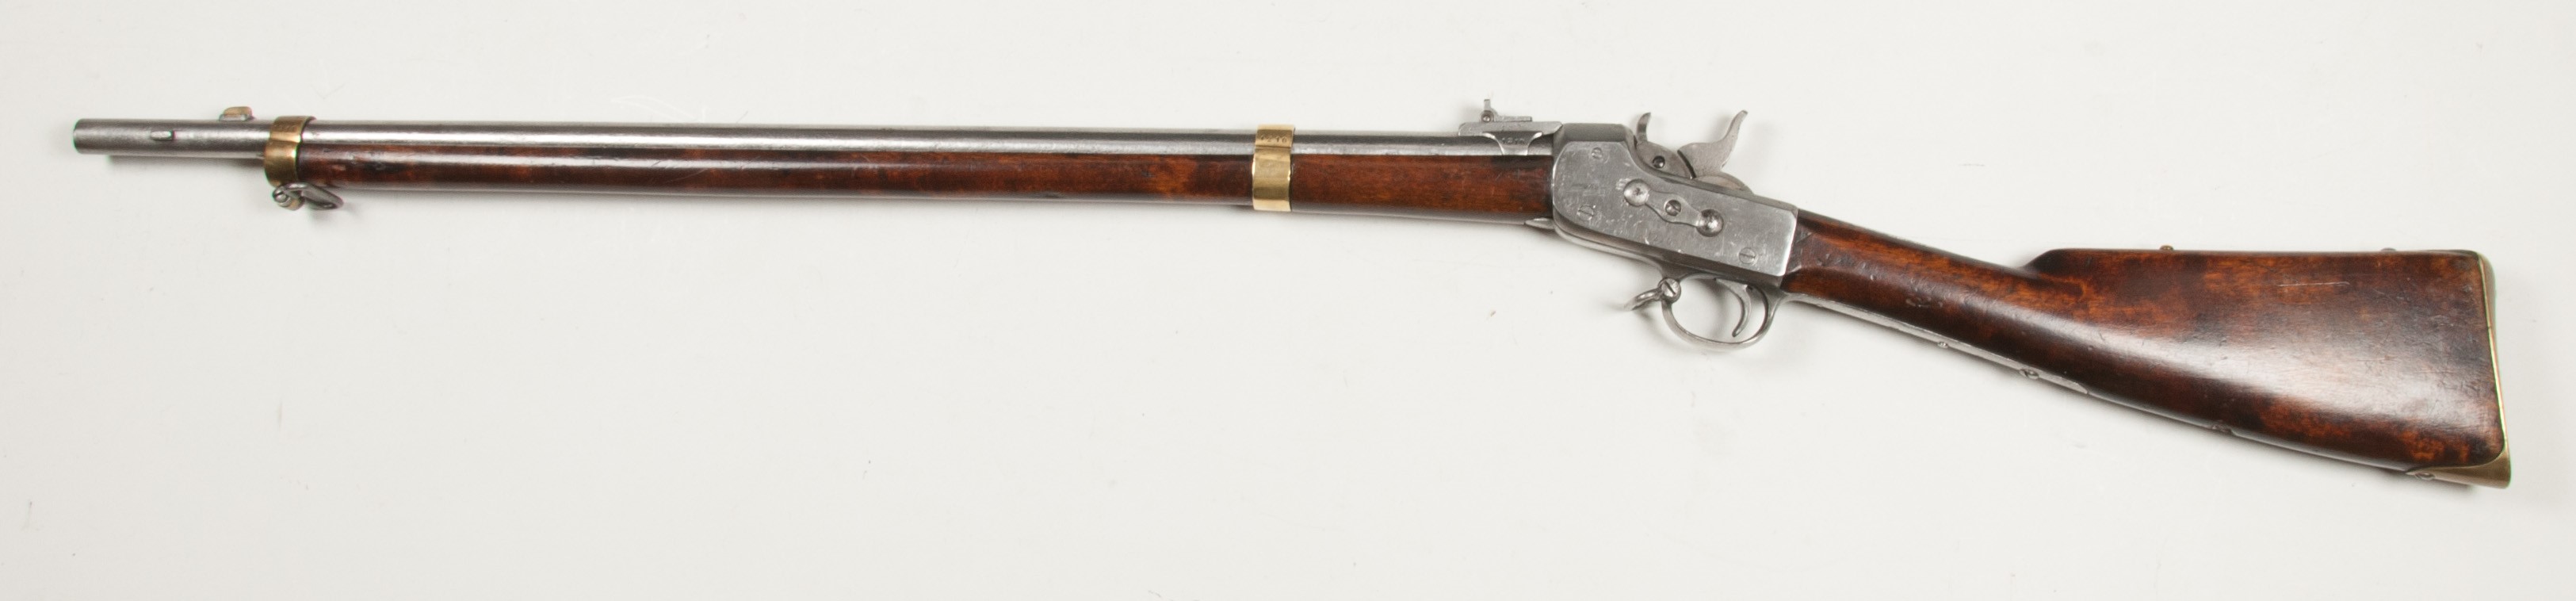 ./guns/rifle/bilder/Rifle-Kongsberg-RollingBlock-M1860-67-MARINE-1868-1210-1.jpg